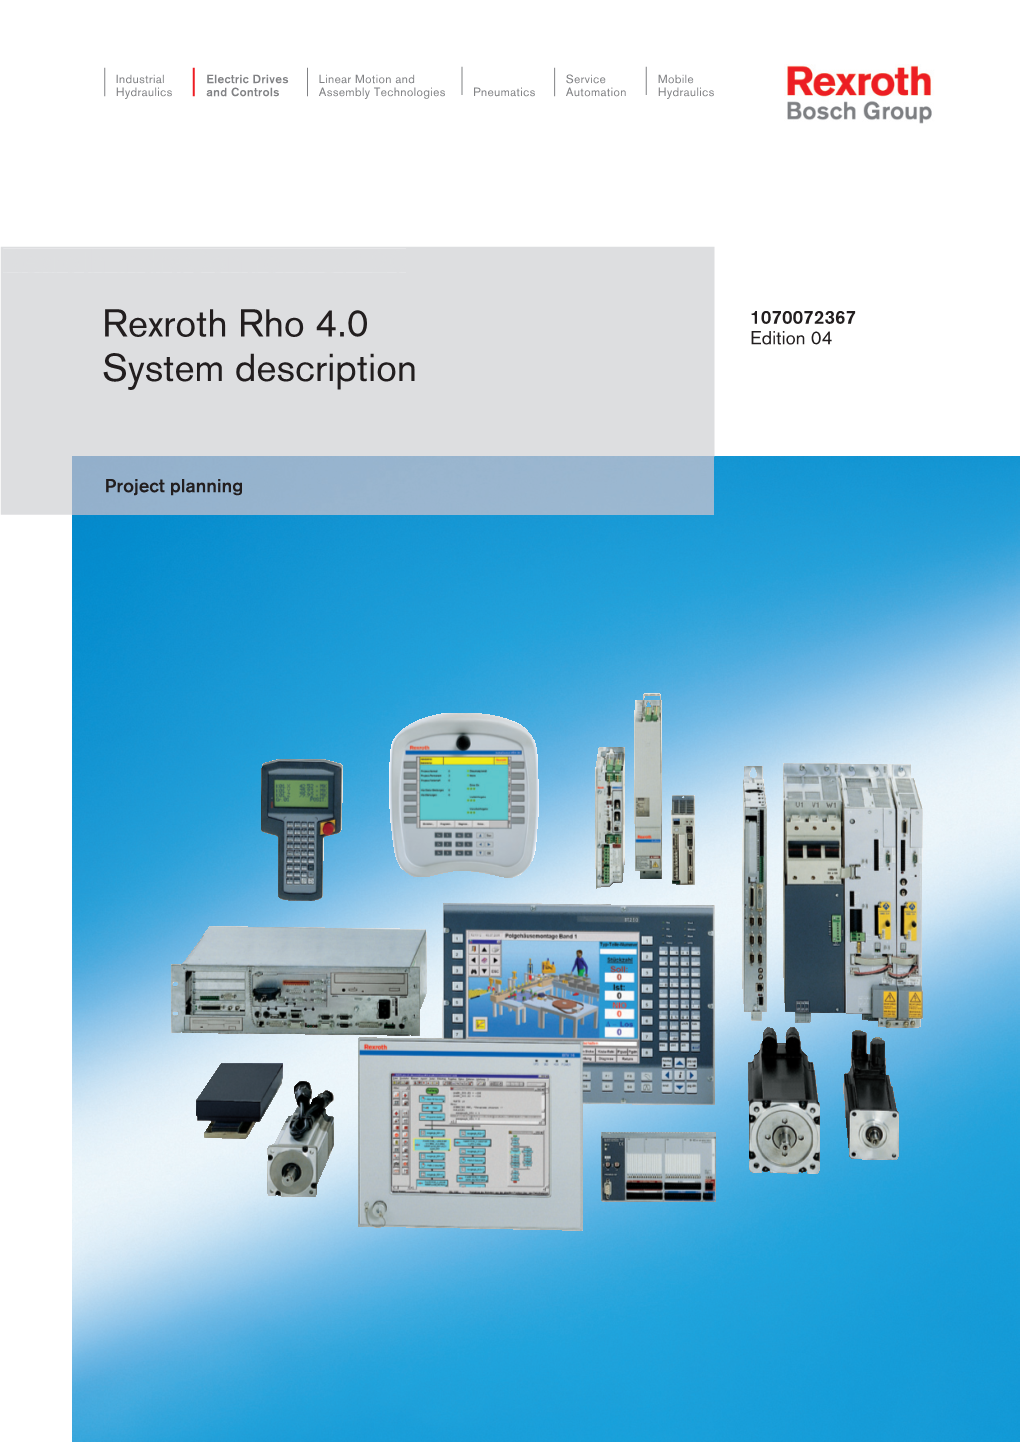 Rexroth Rho 4.0 System Description